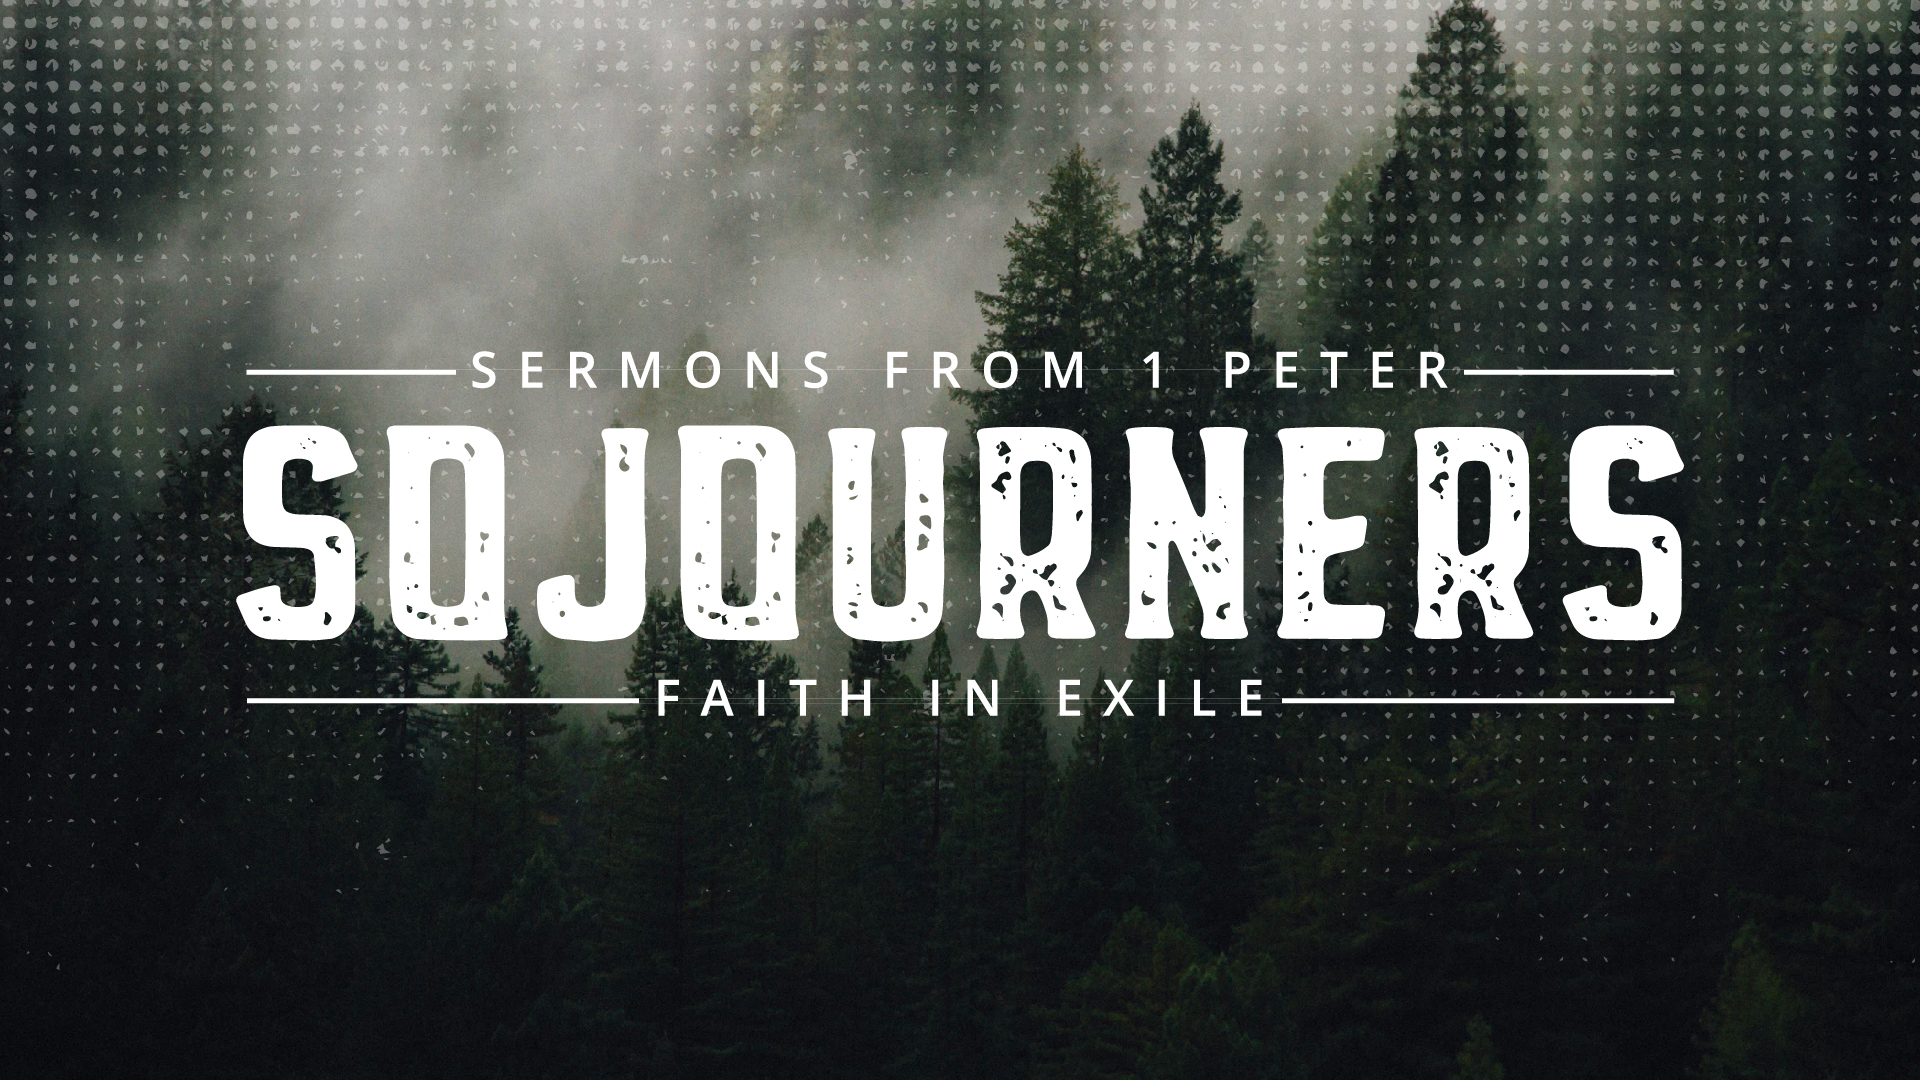 City Church Sermon series - sojourners: faith in exile